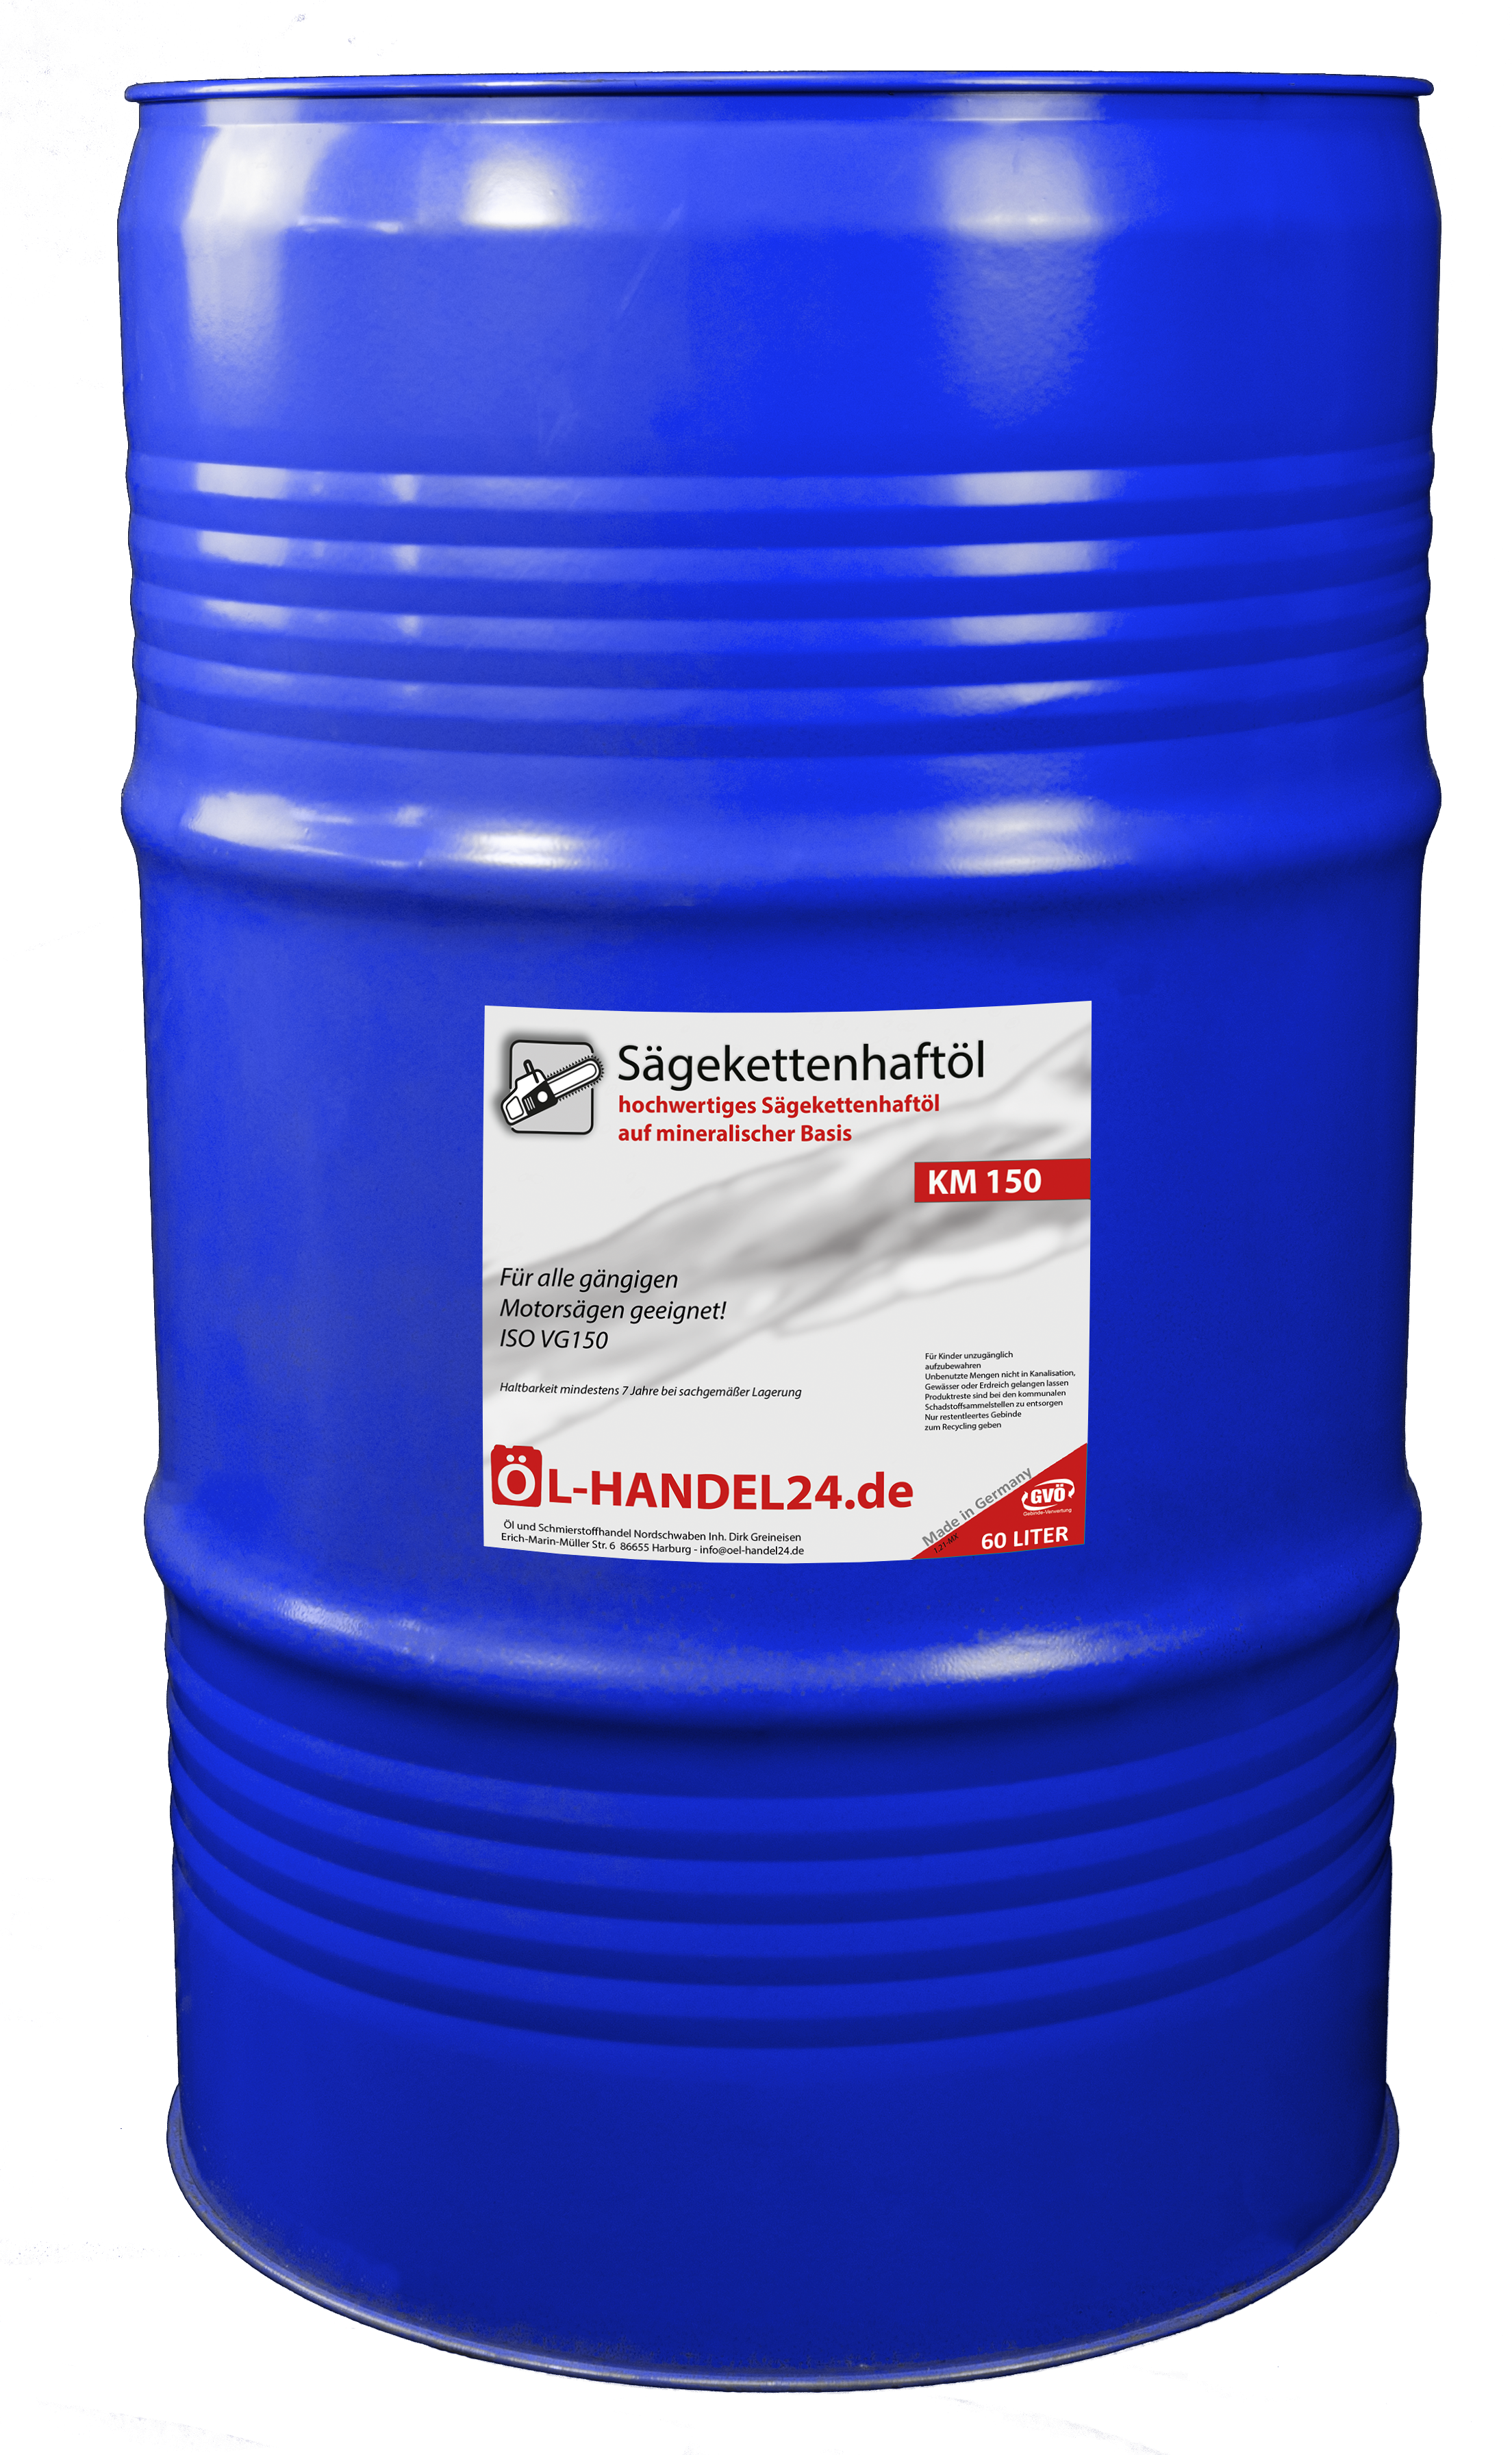 OEL-HANDEL24 - KM150 - Hochleistungs Sägekettenöl